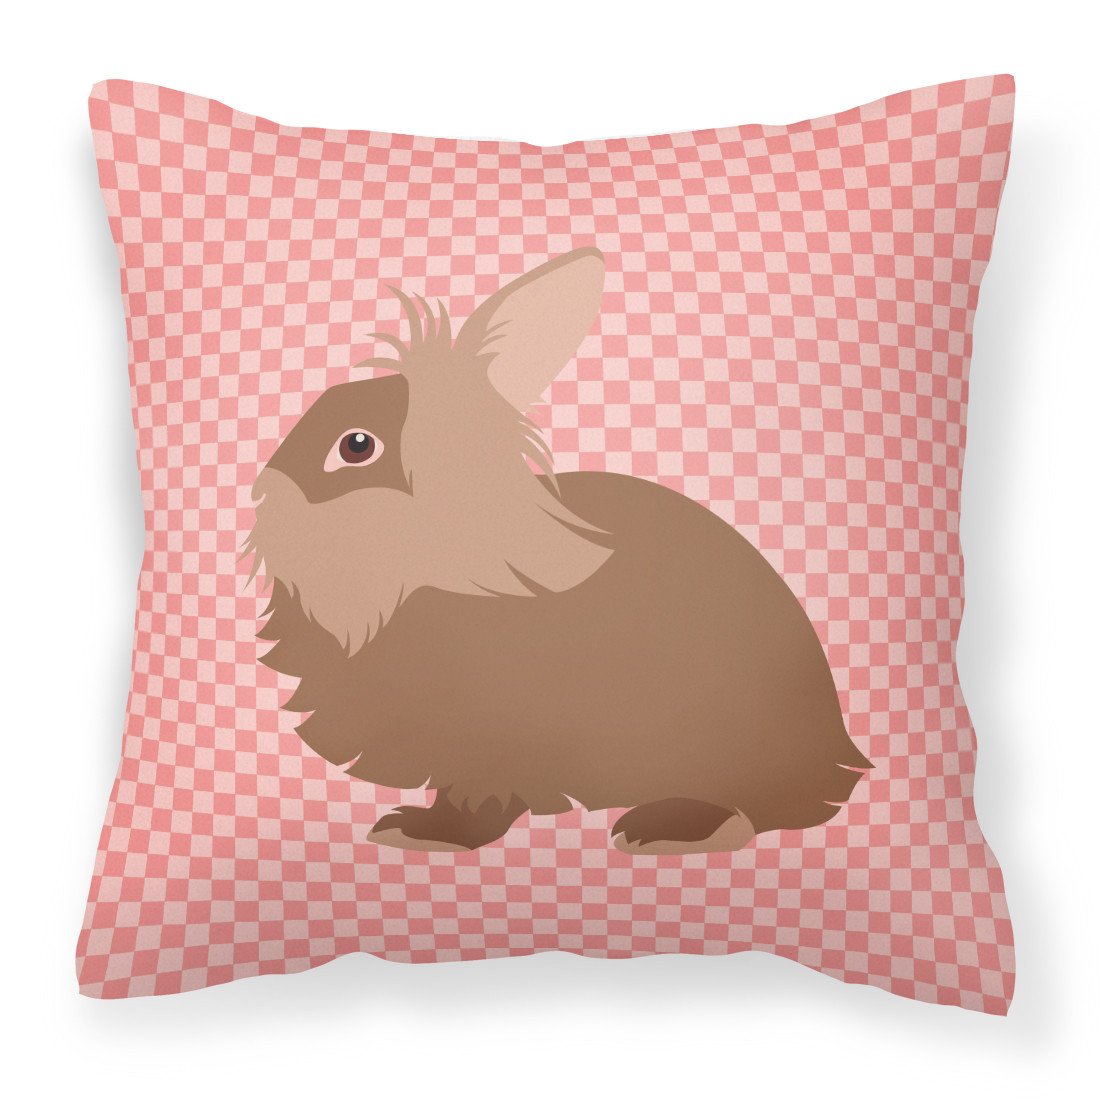 Lionhead Rabbit Pink Check Fabric Decorative Pillow BB7960PW1818 by Caroline's Treasures